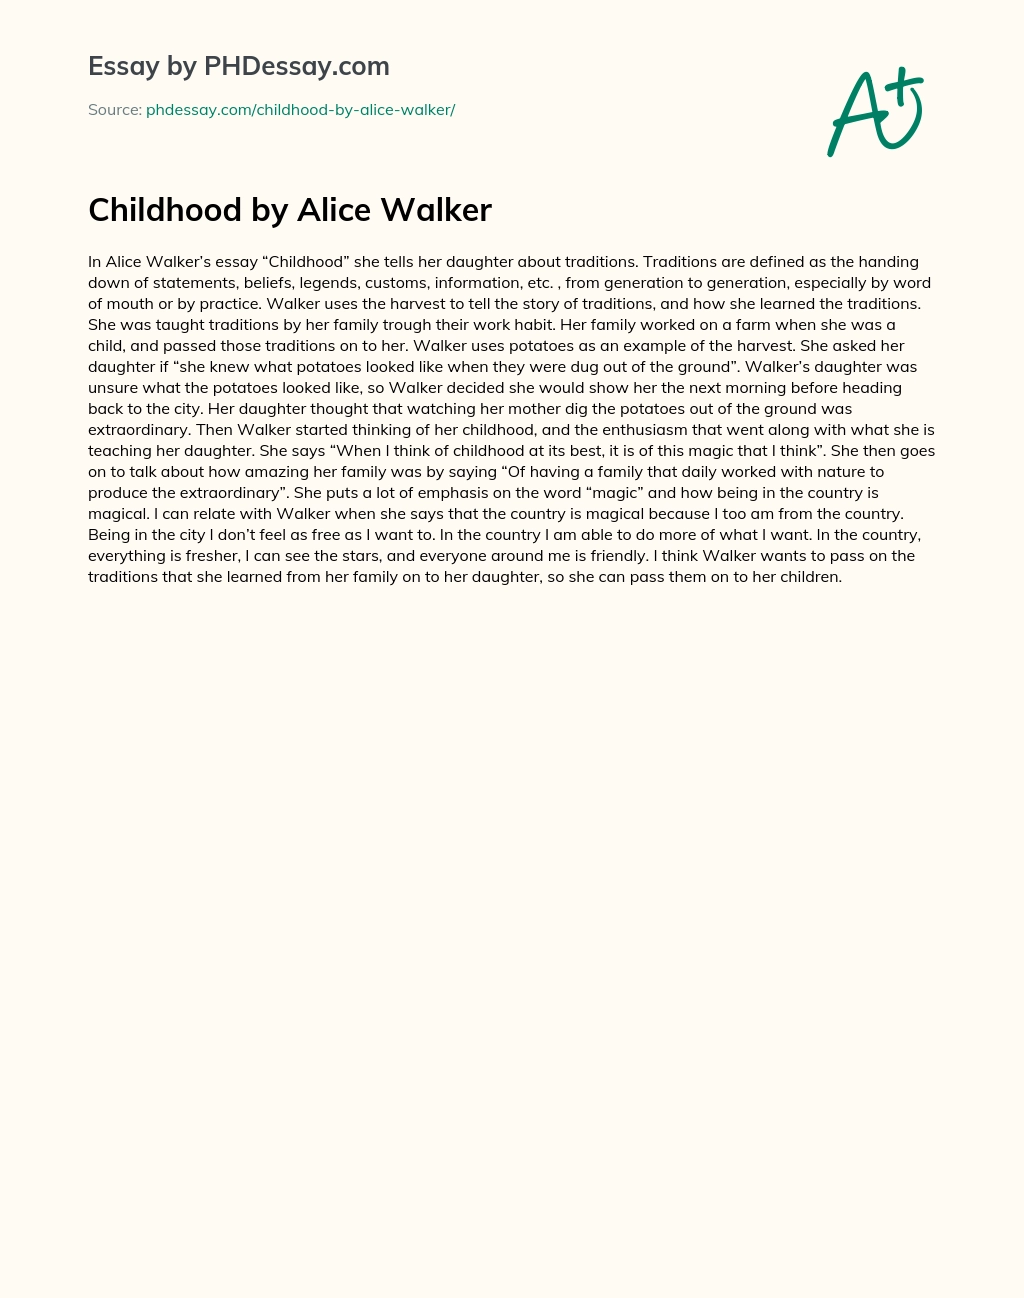 alice walker childhood